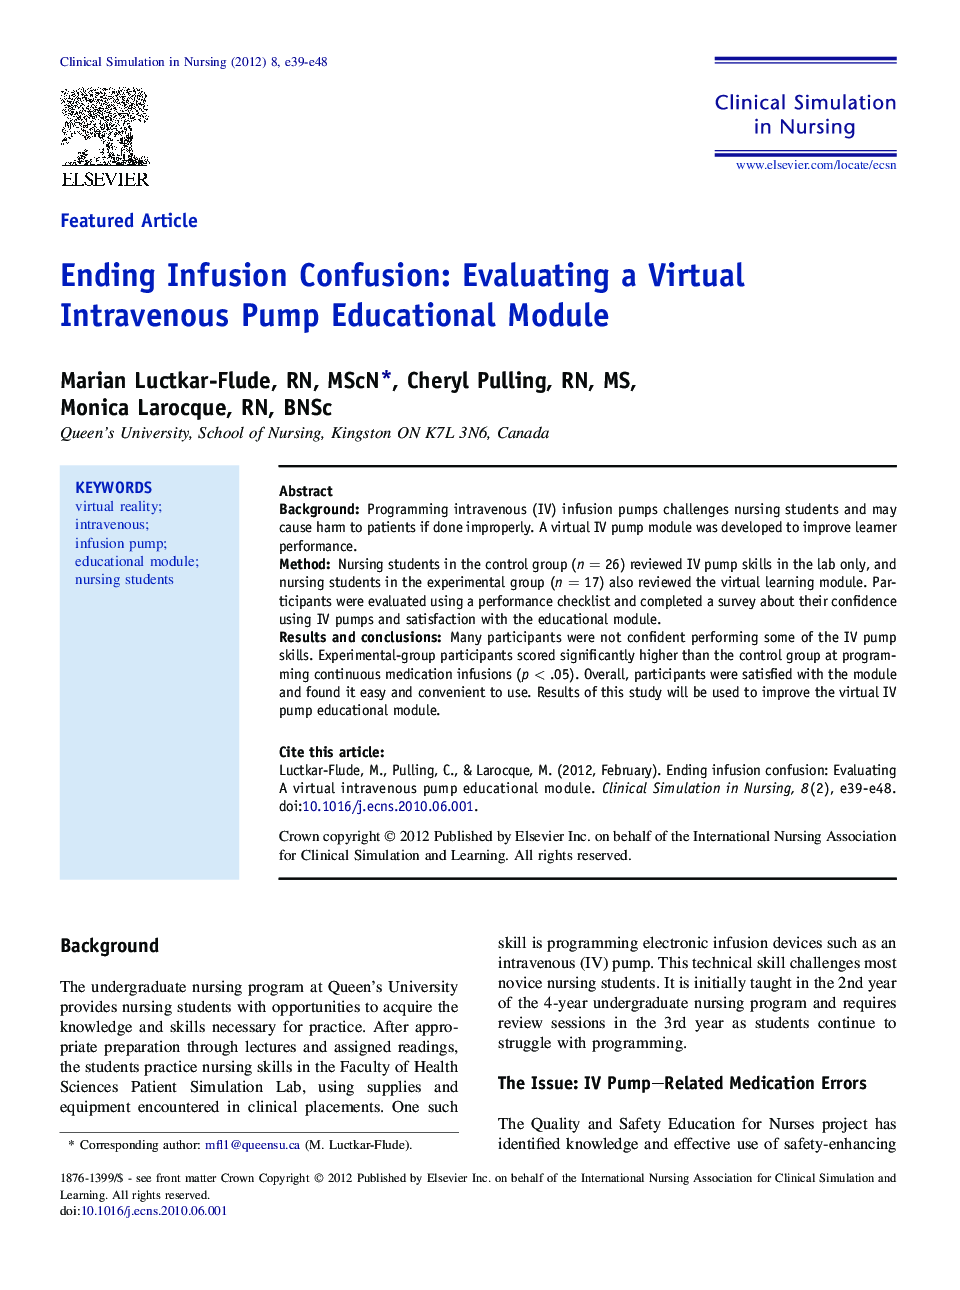 Ending Infusion Confusion: Evaluating a Virtual Intravenous Pump Educational Module